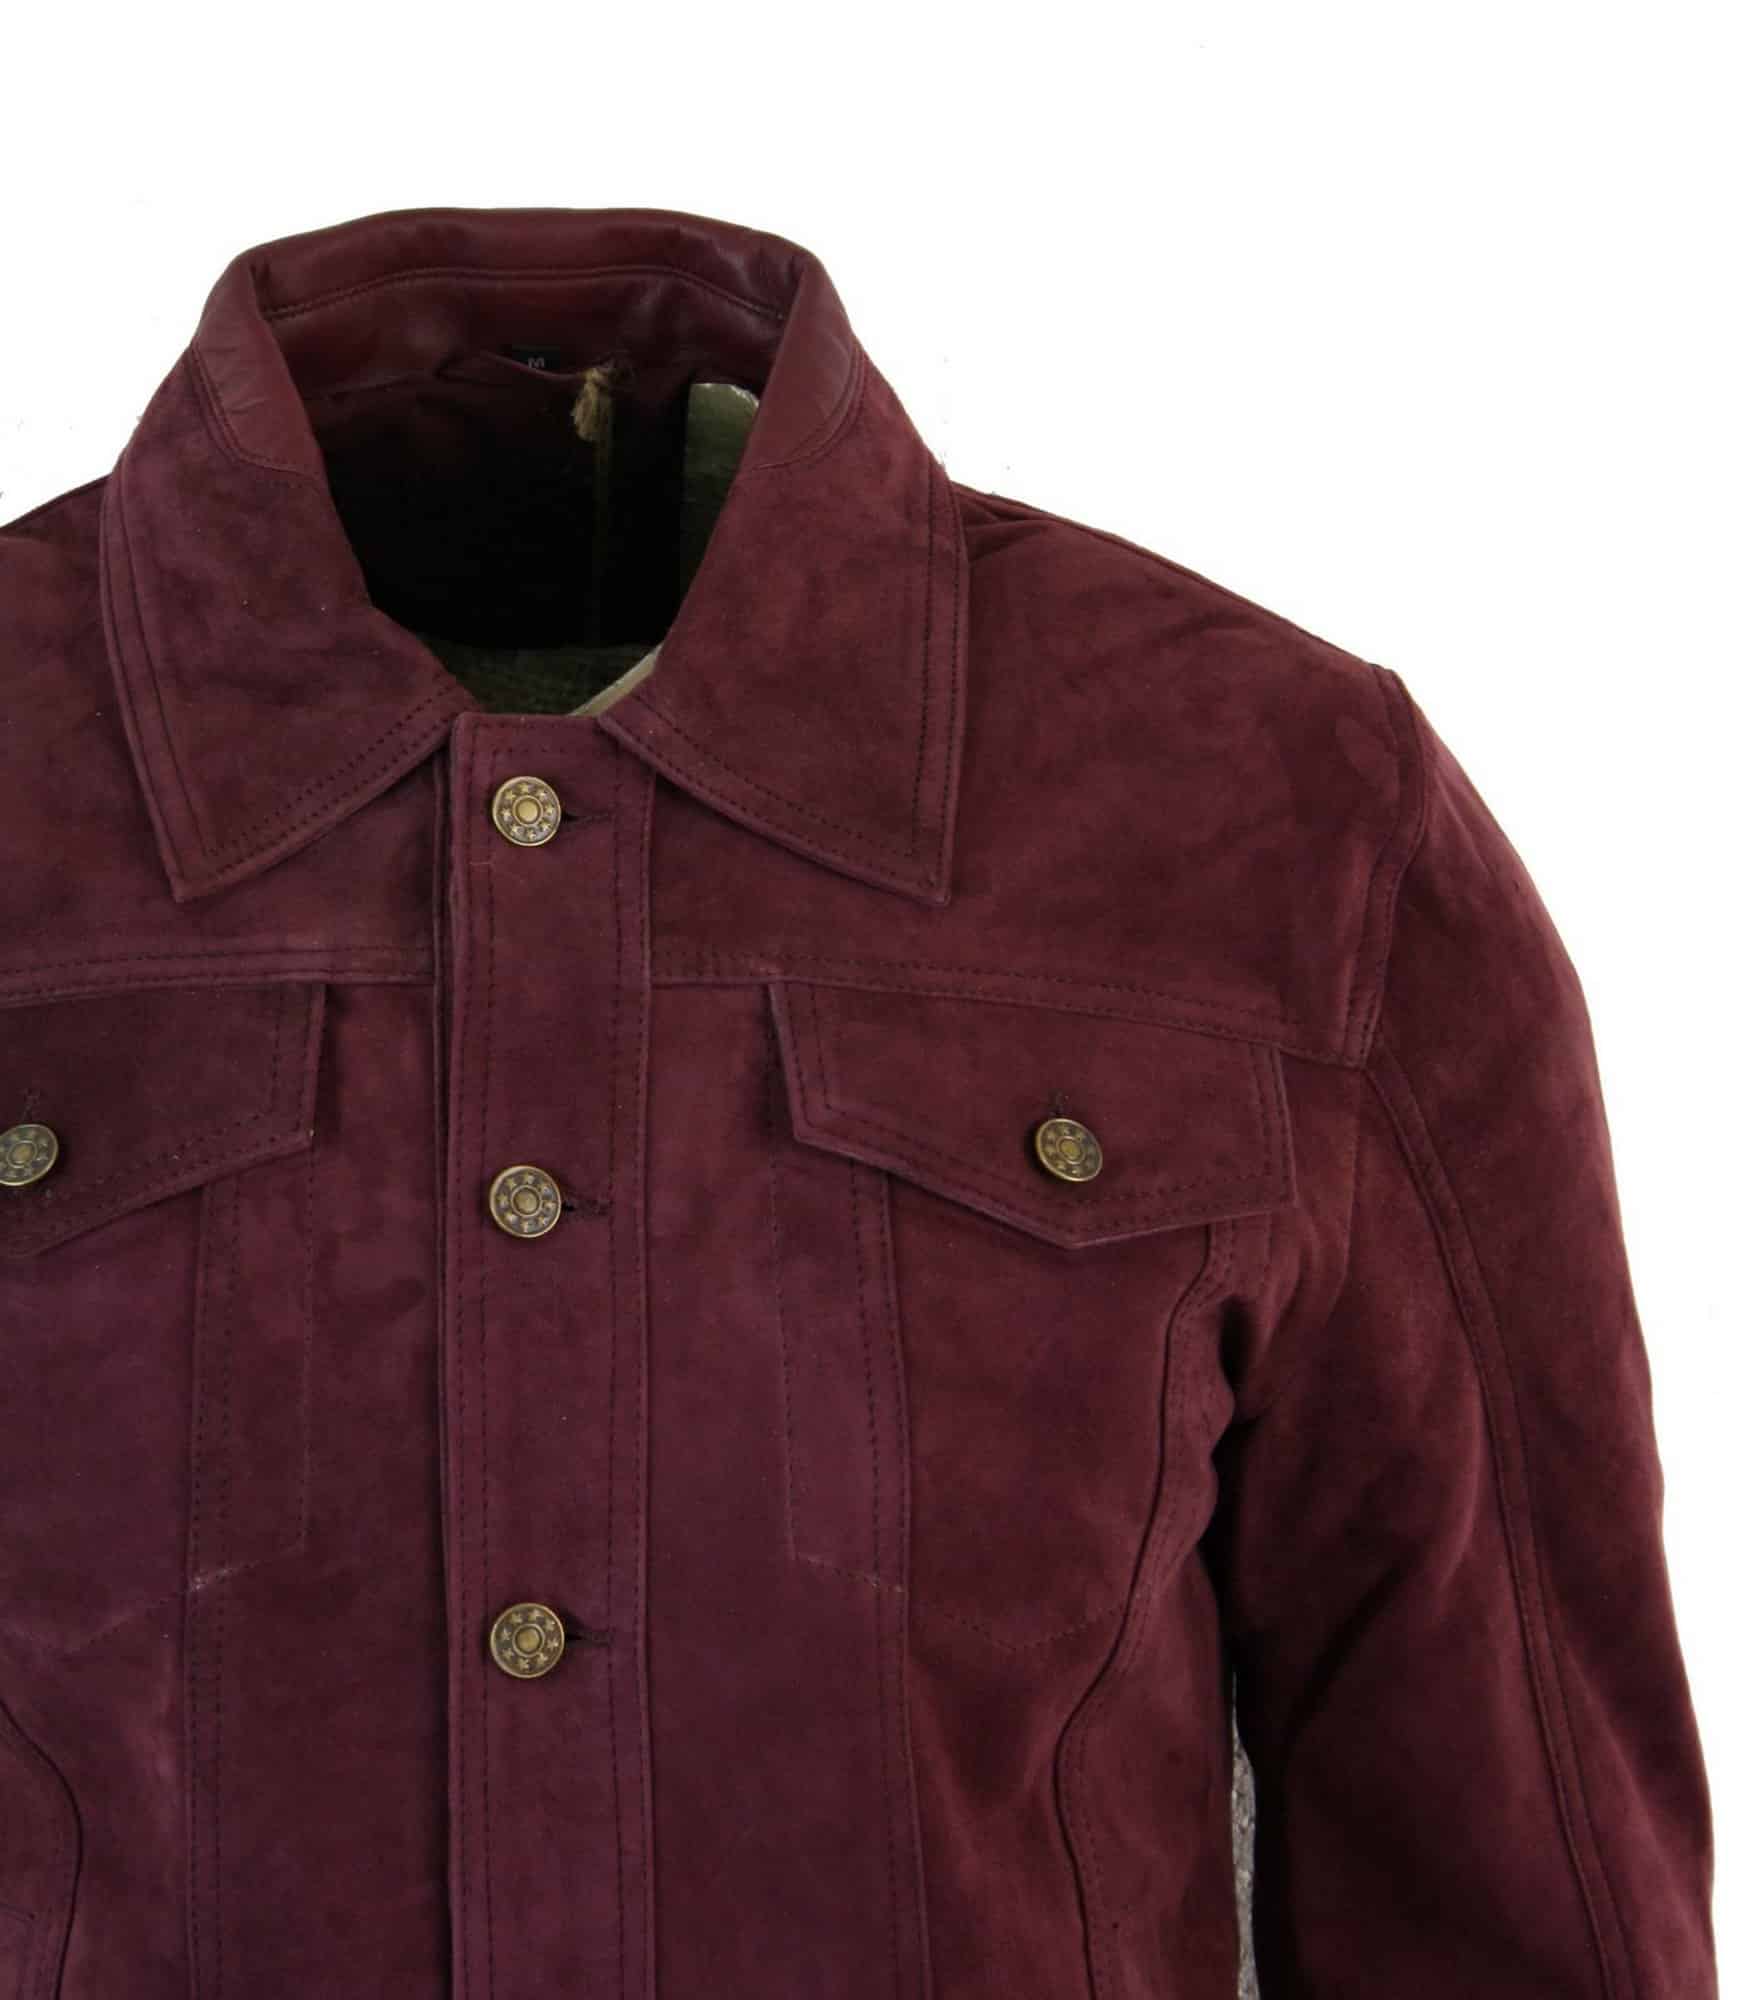 Real Suede Leather Mens Vintage Short Denim Style Retro Jean Jacket Casual  - Burgundy Color: Buy Online - Happy Gentleman